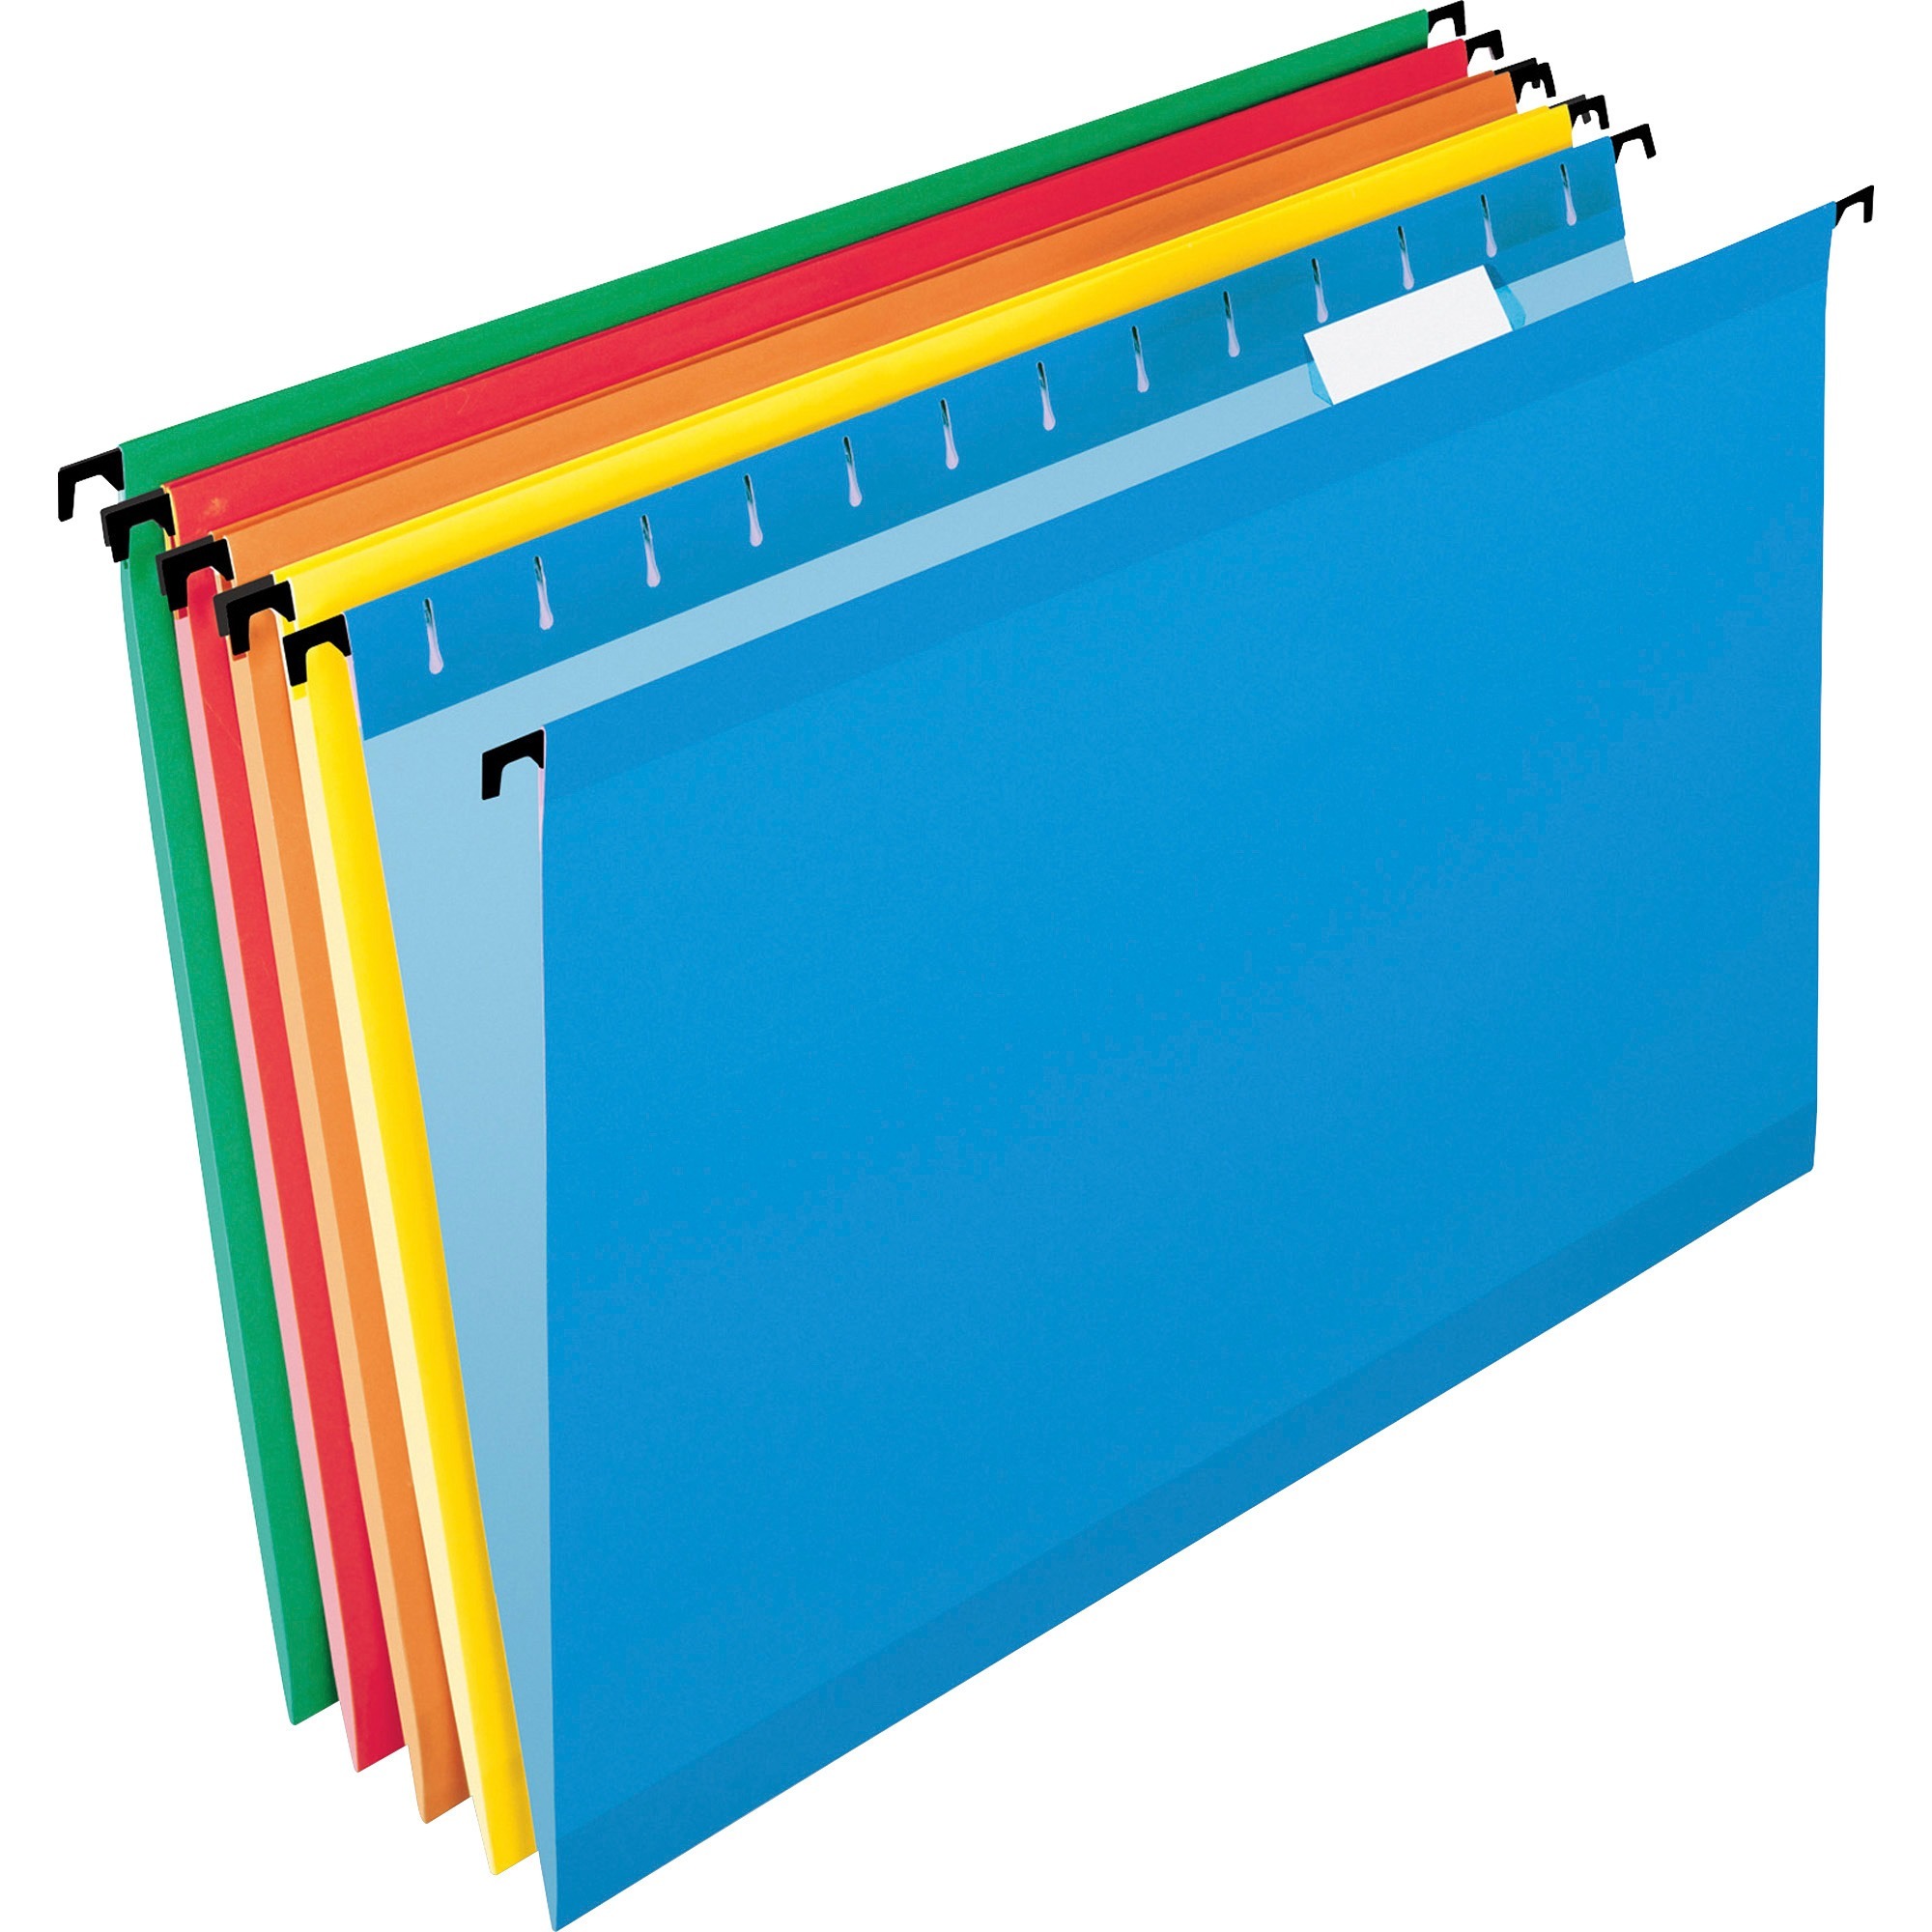 Pendaflex SureHook 1/5 Tab Cut Legal Recycled Hanging Folder - 8 1/2" x 14" - Blue, Red, Orange, Yellow, Bright Green - 10% Recy